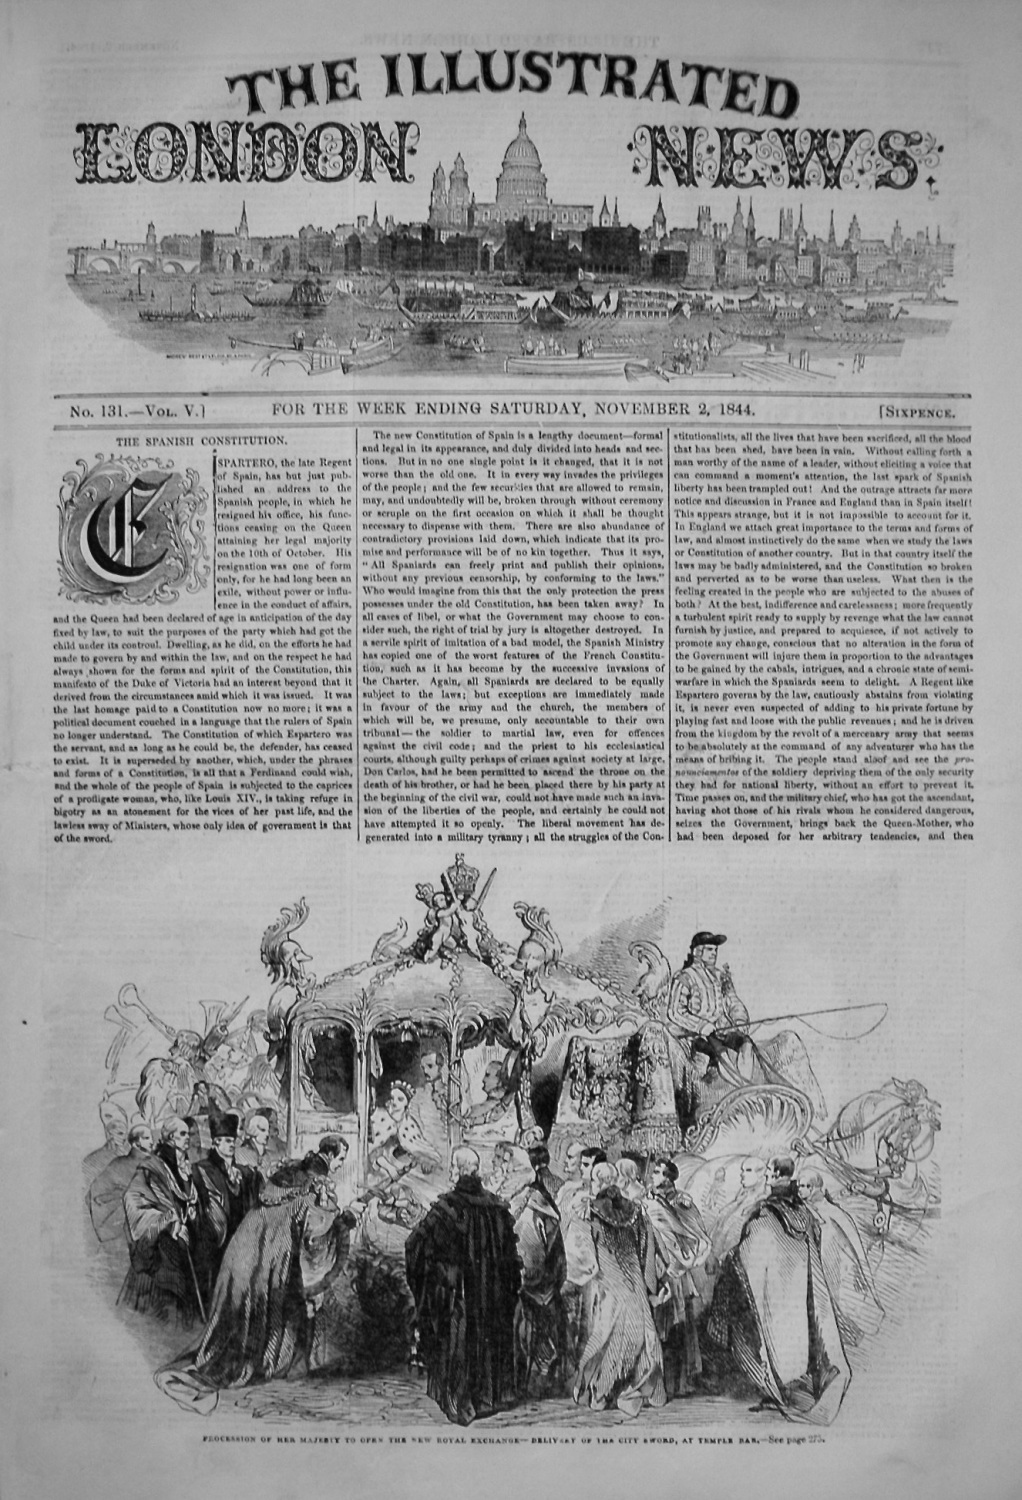 Illustrated London News. November 2nd, 1844.